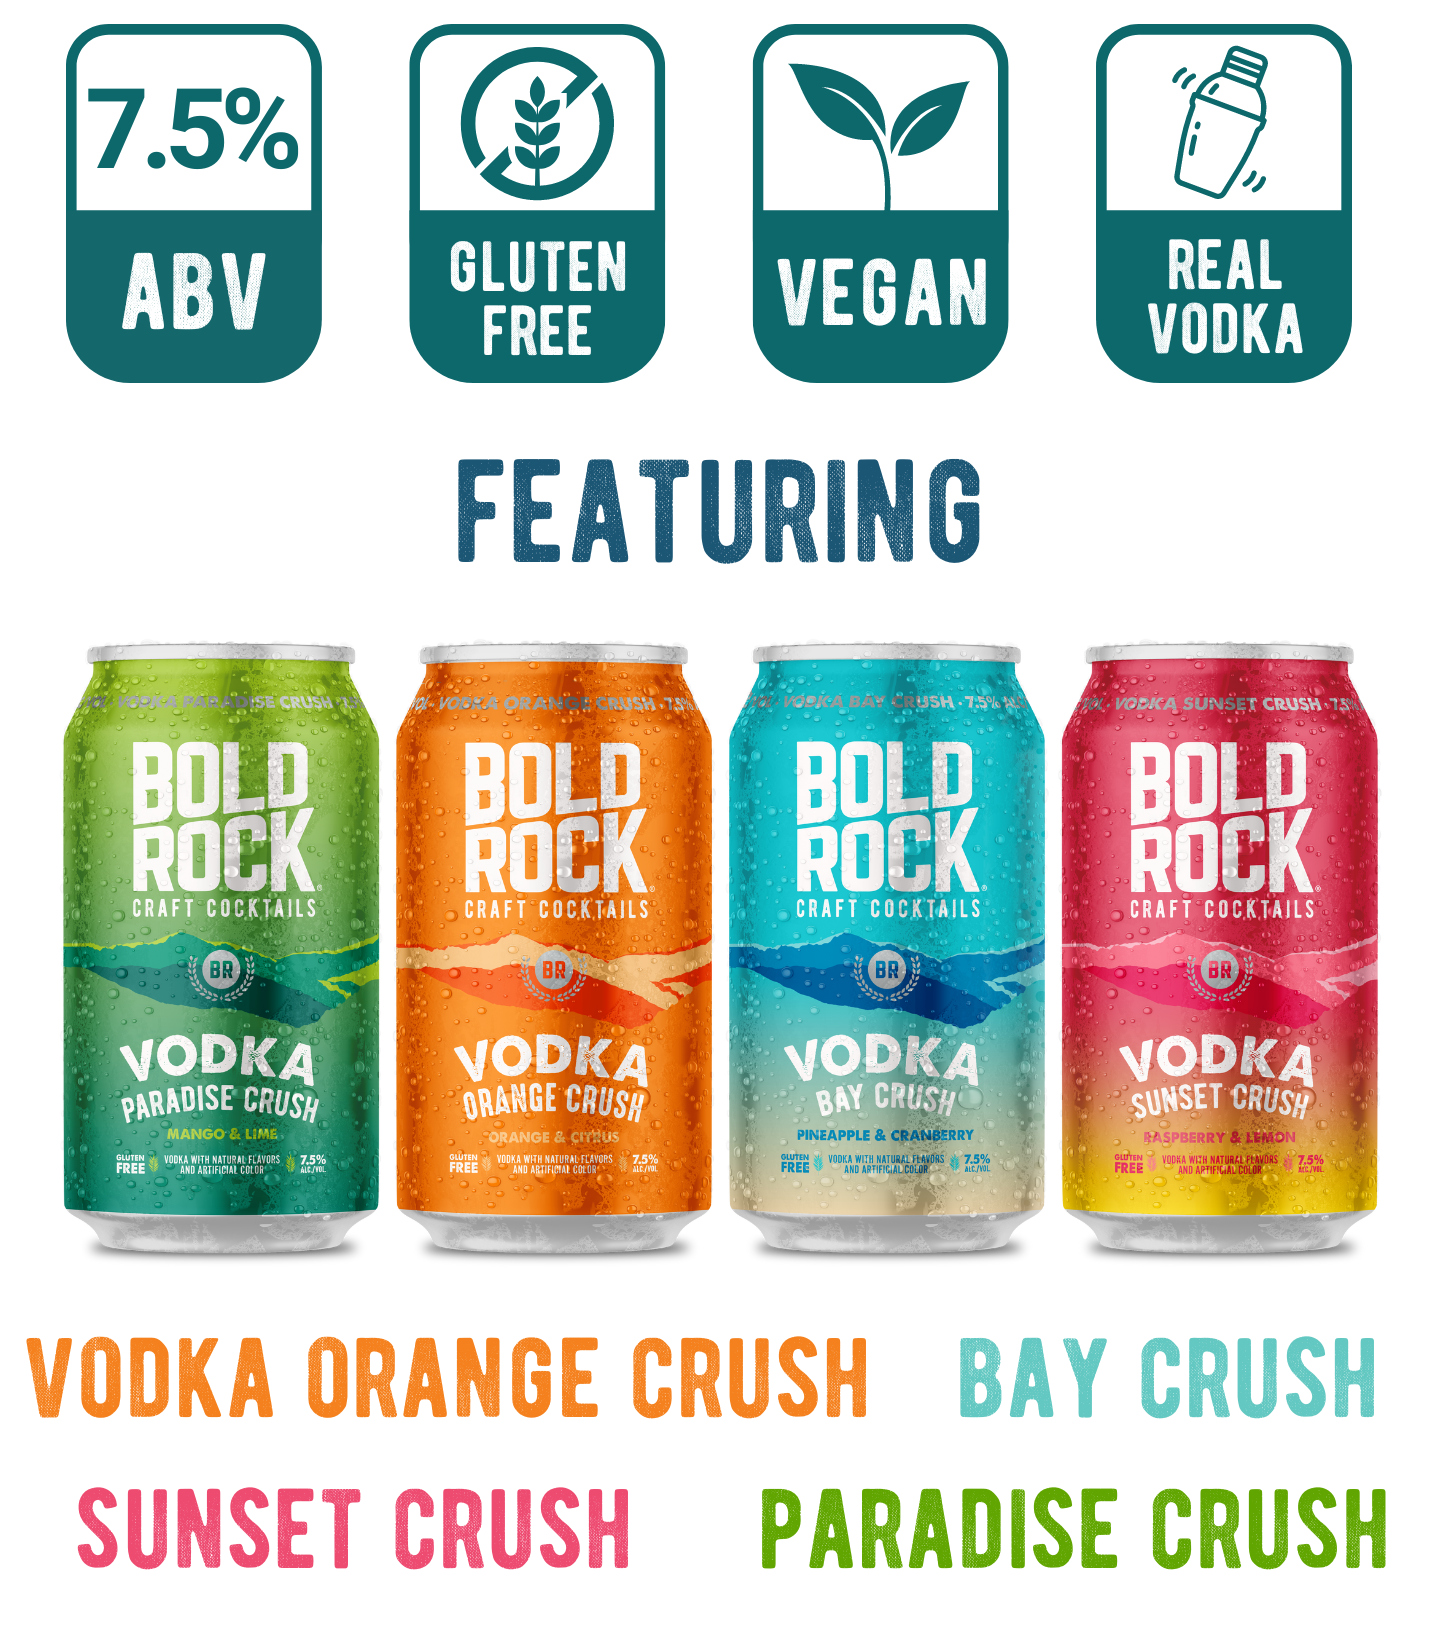 7.5% ABV, gluten free, vegan, real vodka